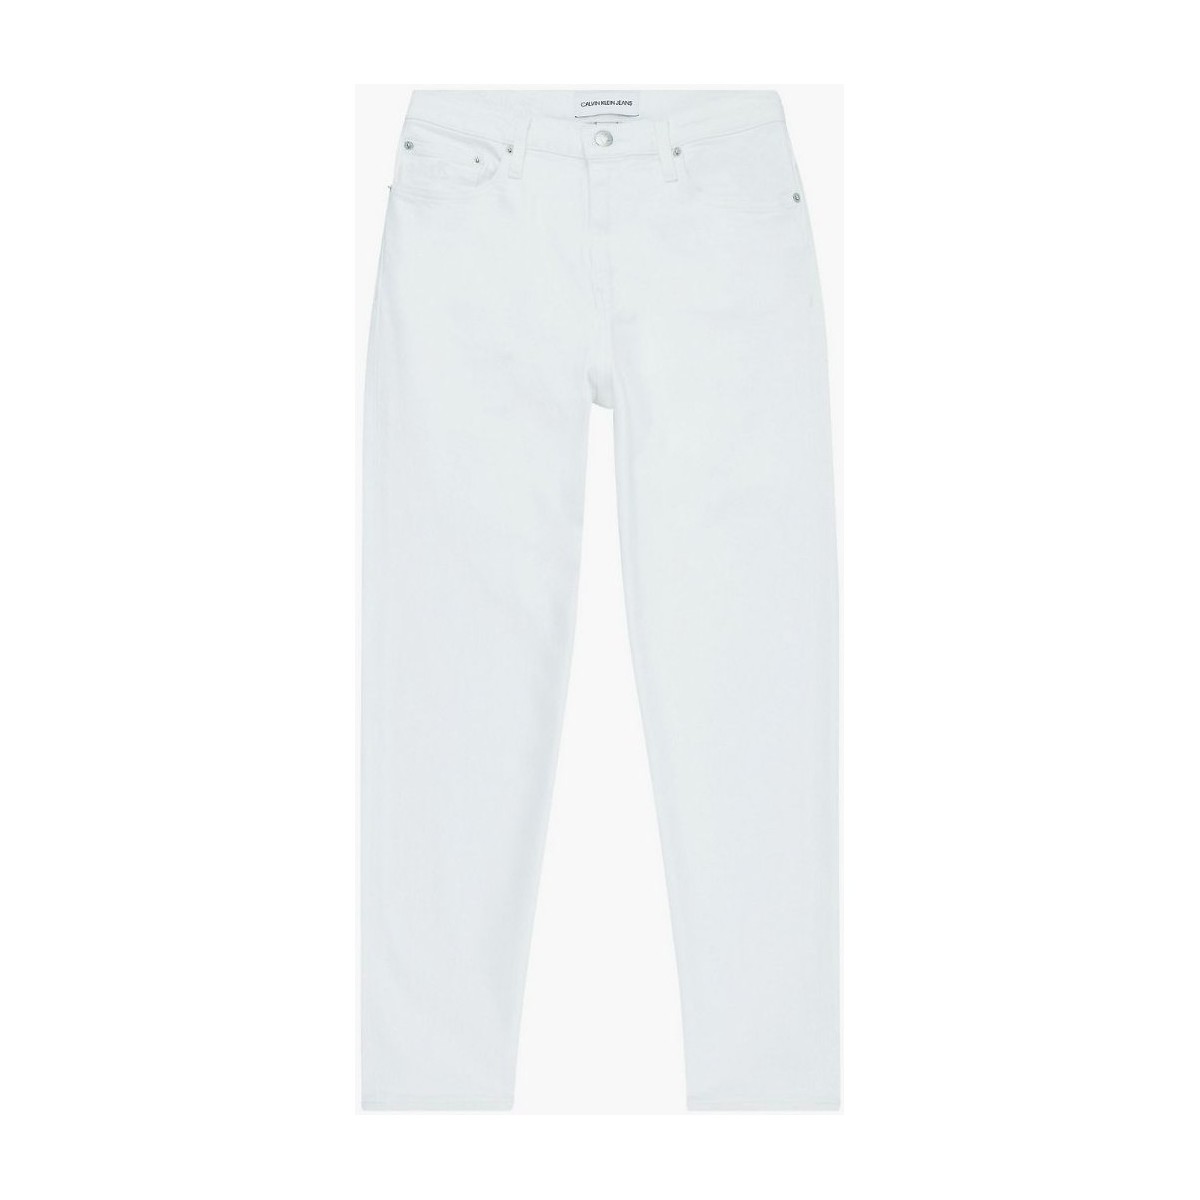 Vêtements Femme Maillots / Shorts de bain piece Calvin Klein Jeans Jean mom piece Calvin Klein femme Ref 53546 1AA blanc Blanc